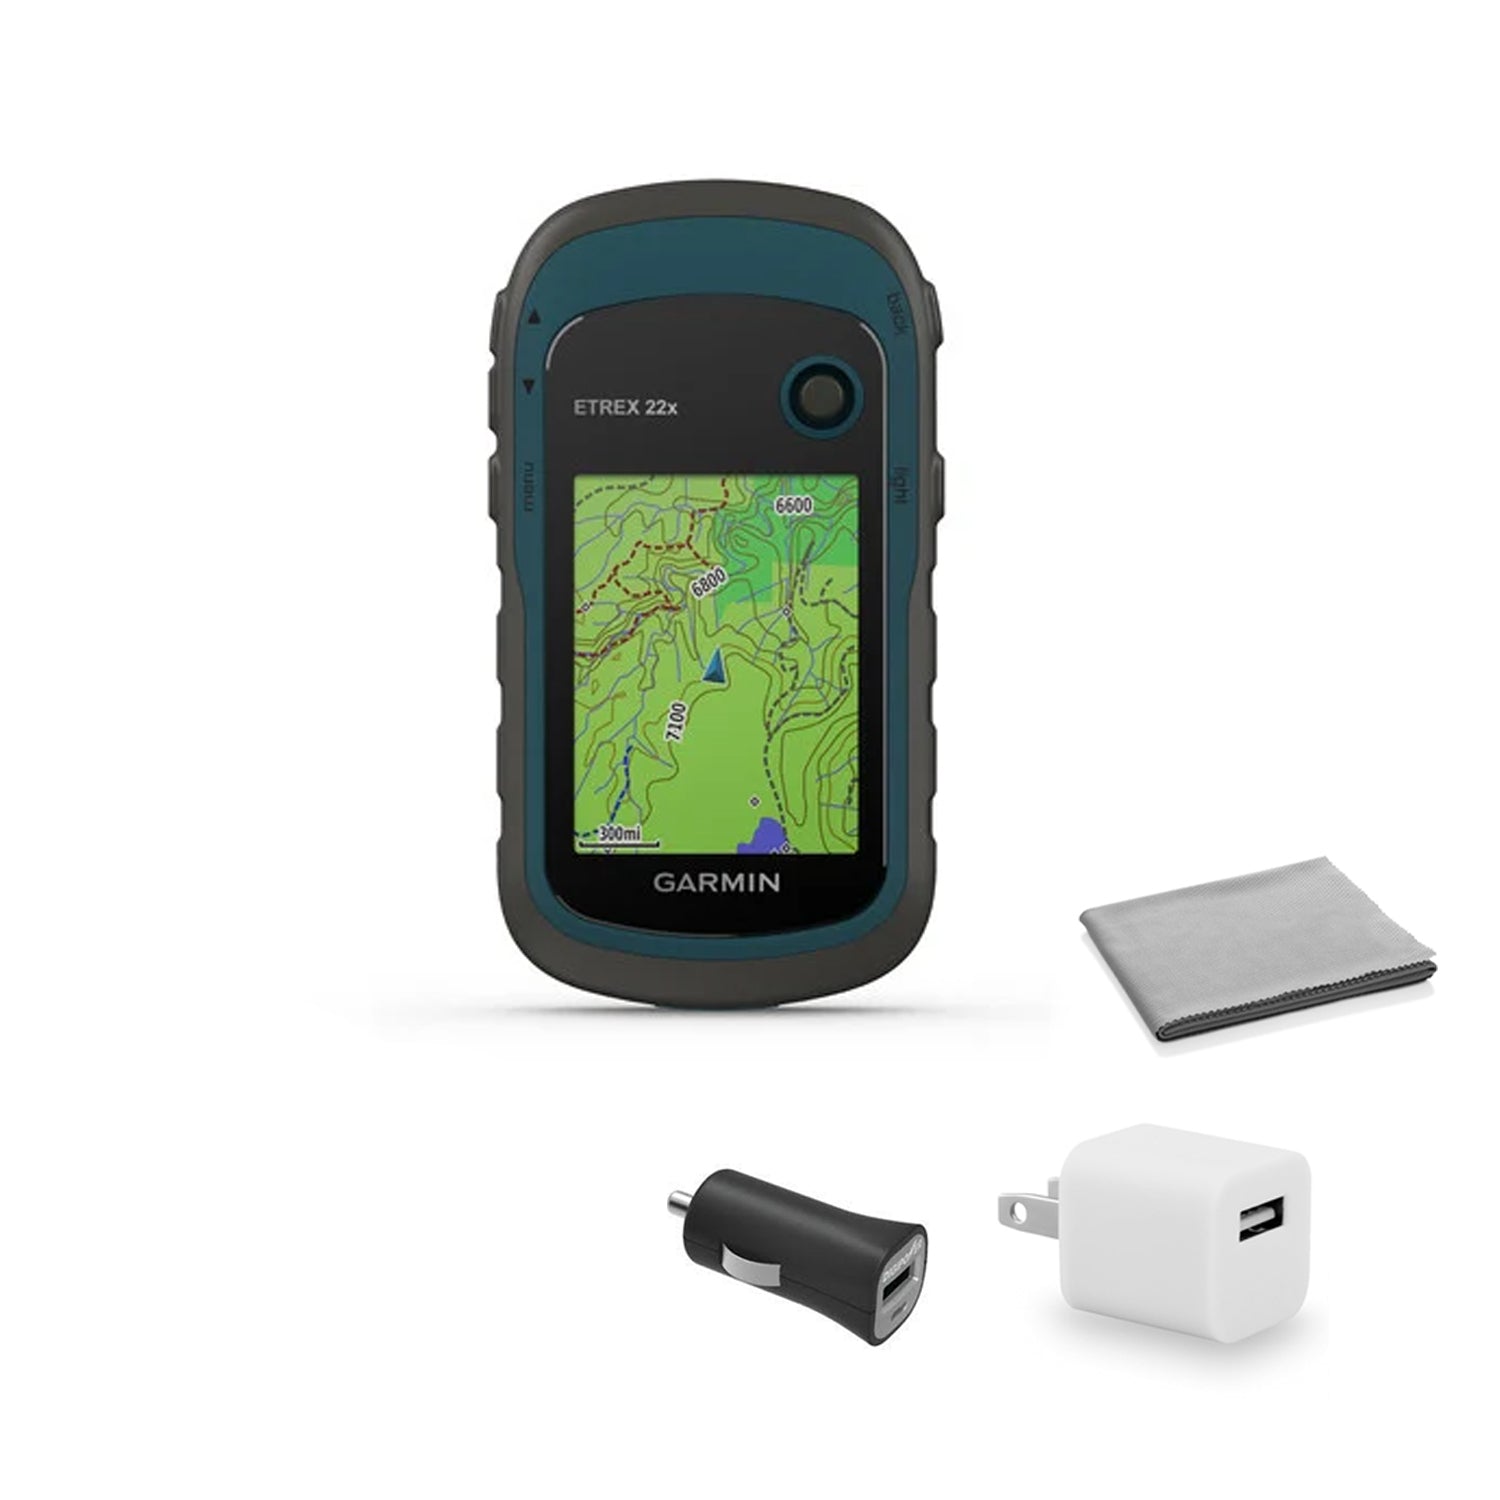 Garmin eTrex 22x Rugged Handheld GPS with USB Adapter Cube Bundle